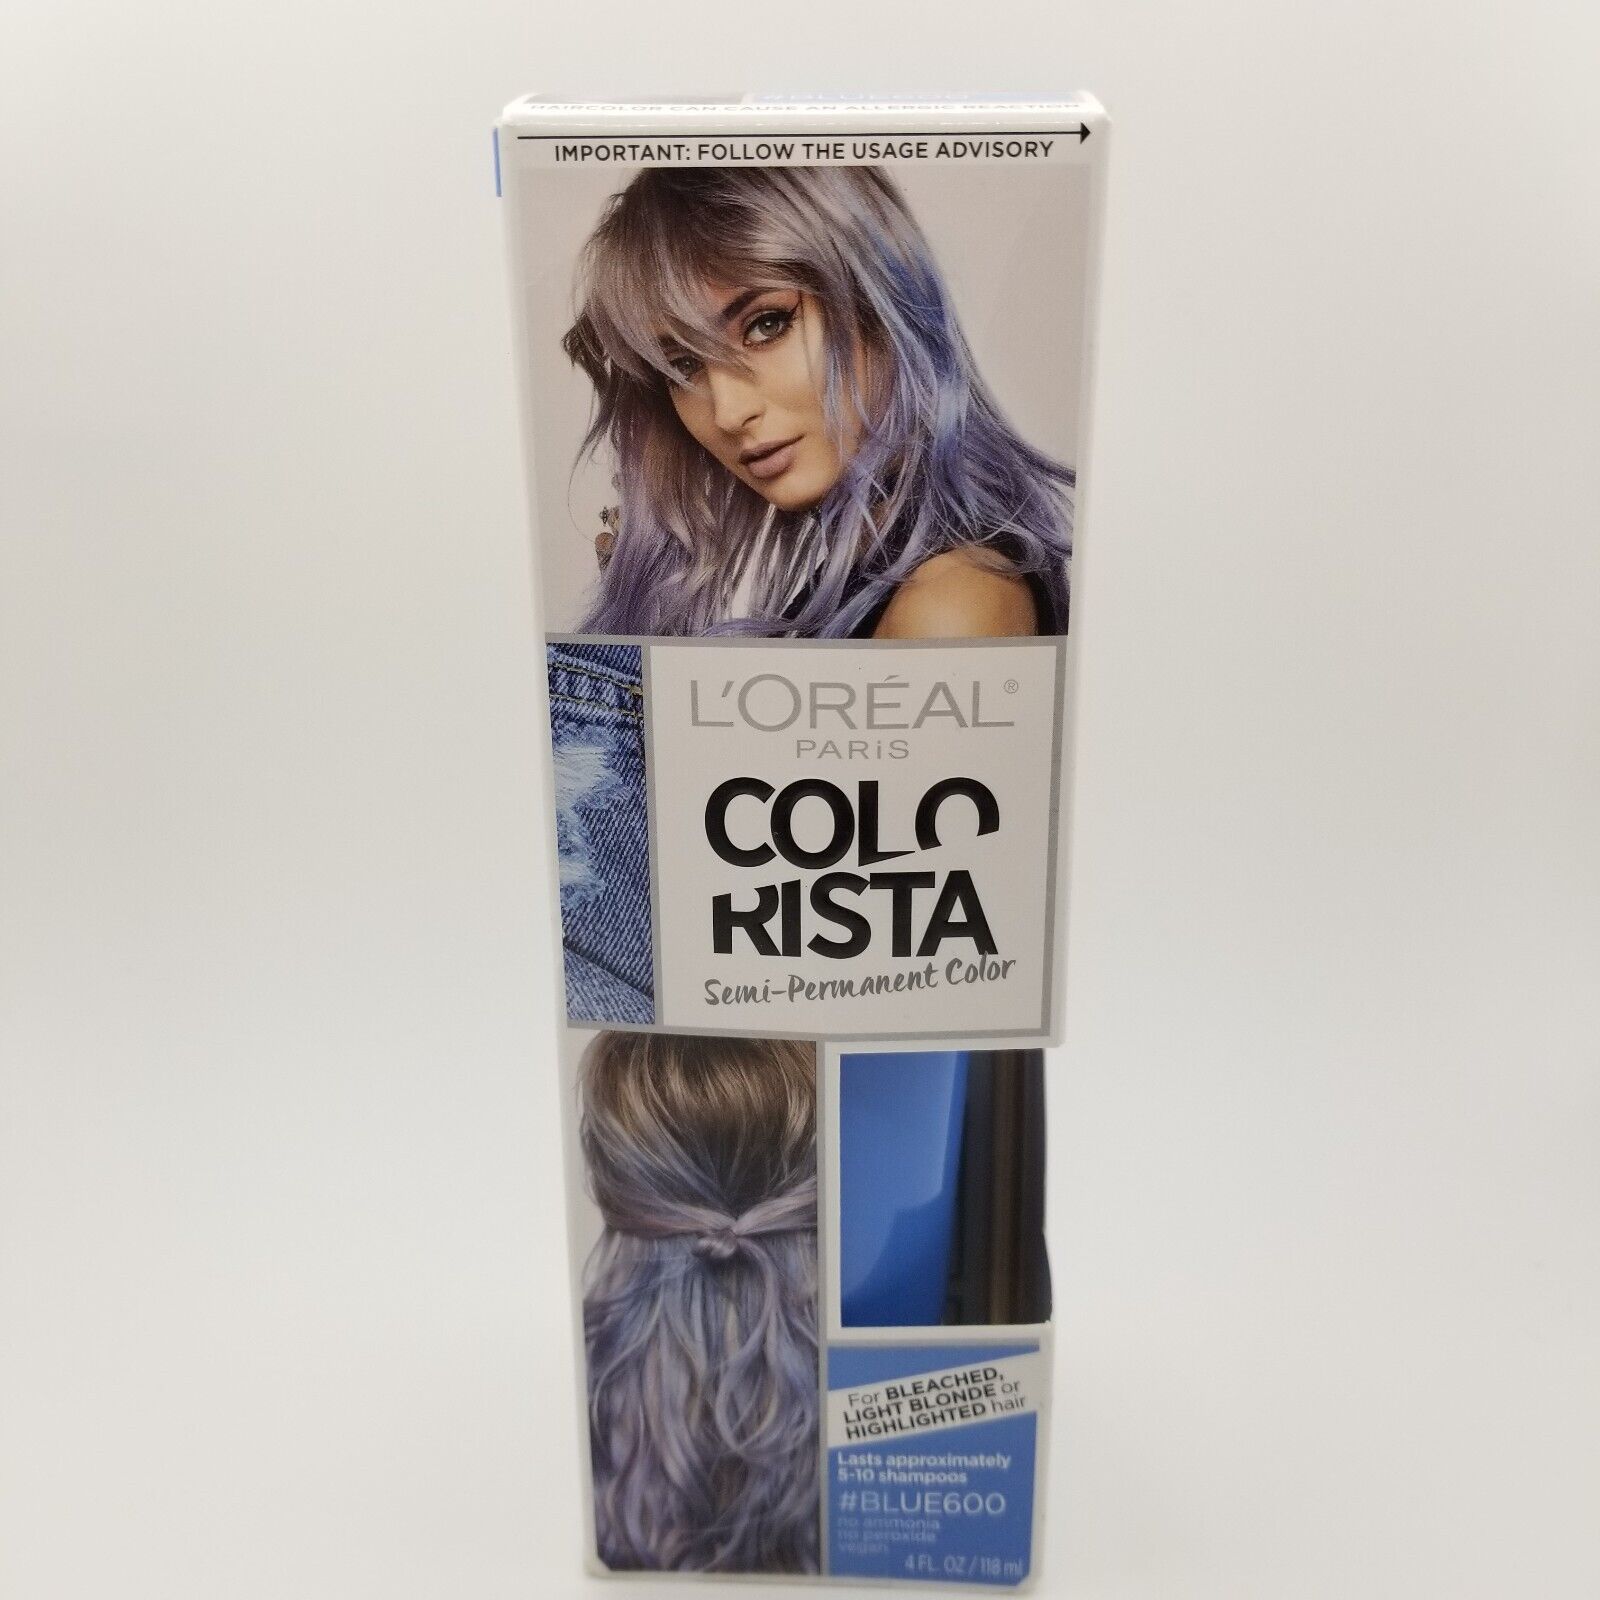 L'Oreal Paris Colorista Semi Permanent Hair Color Light Blondes Blue #600  New 71249337769 | eBay